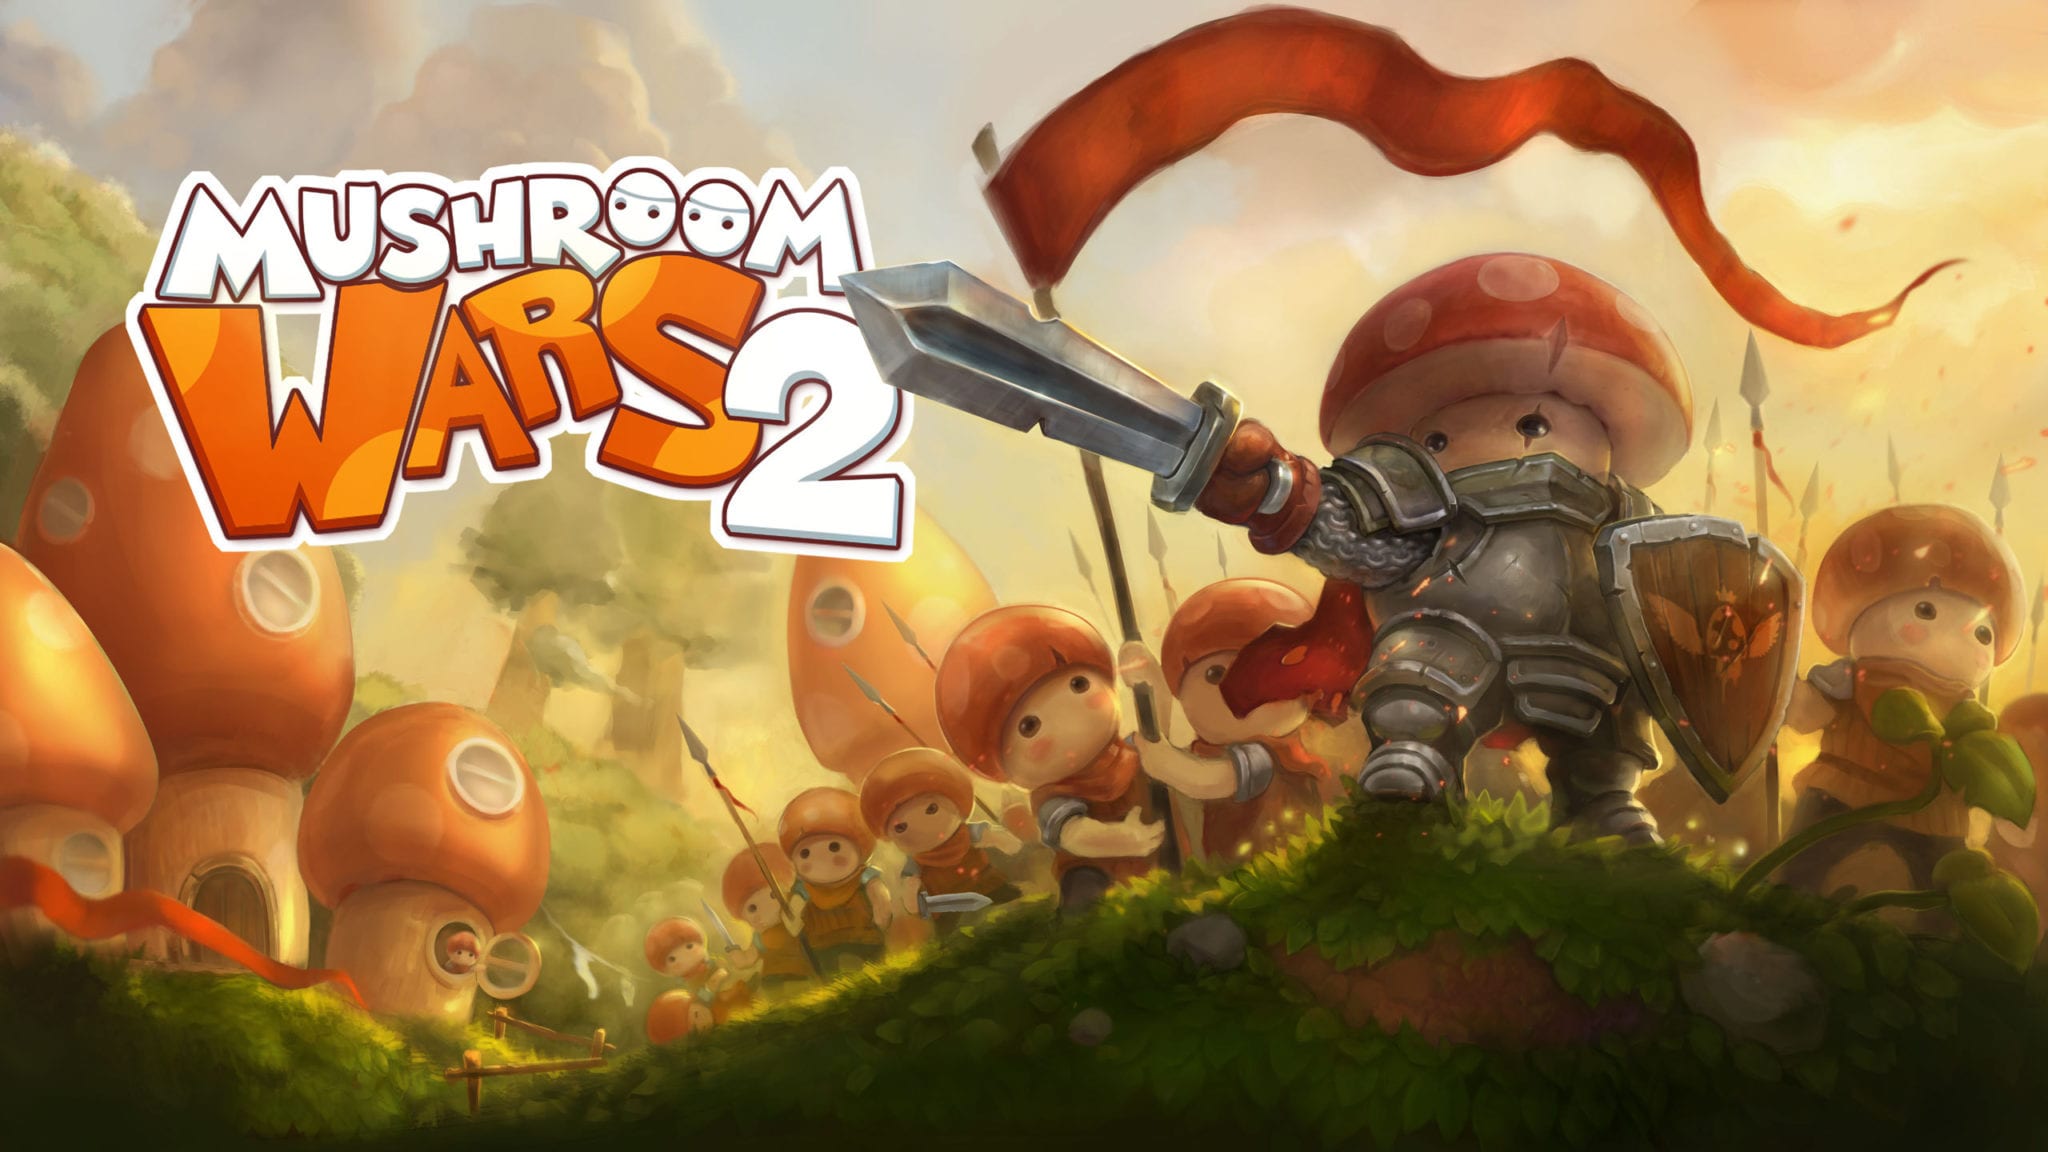 mushroom wars 2 campaign unlock